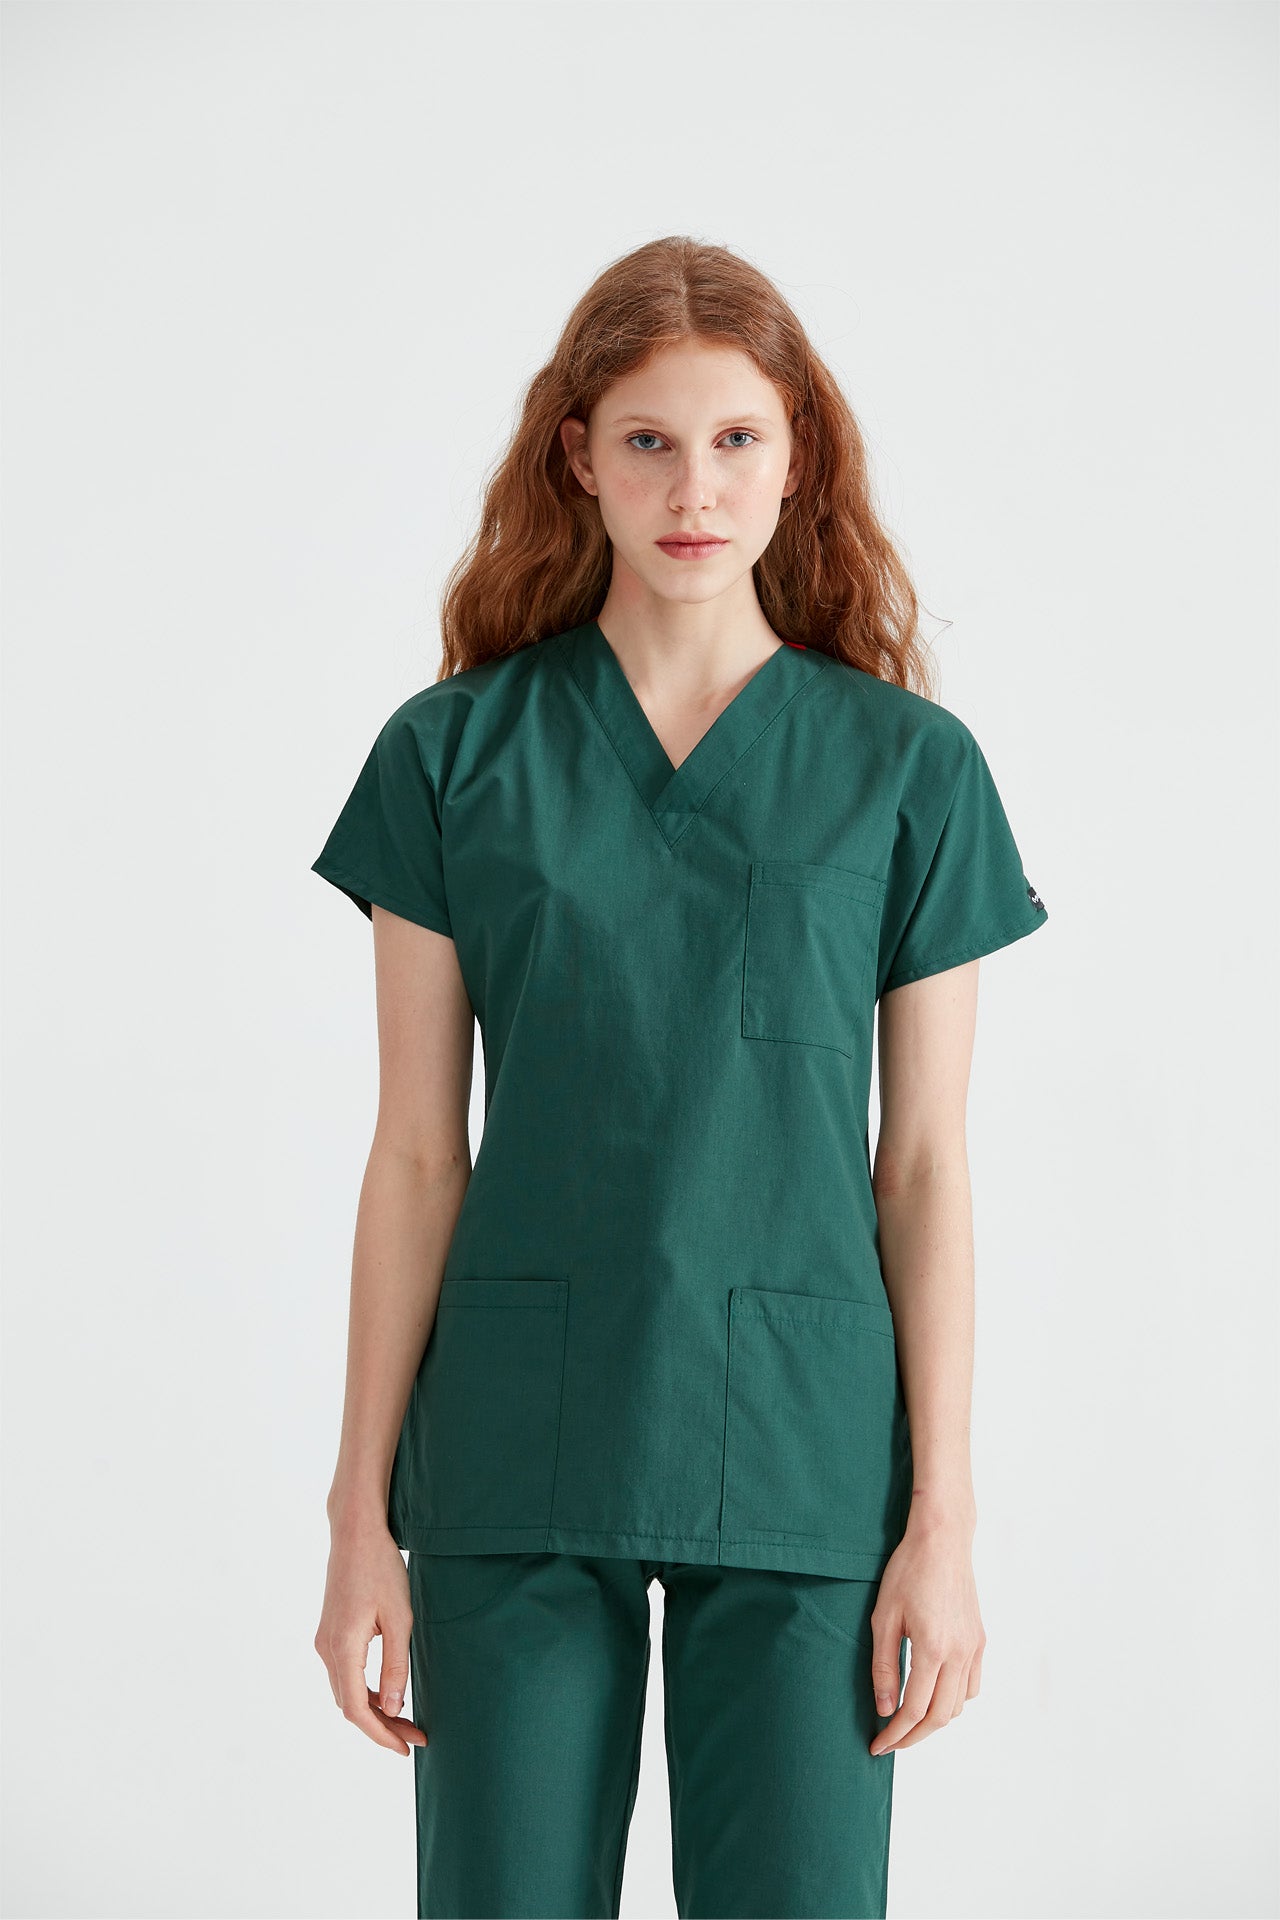 Asistenta medicala imbracata in costum din elastan verde Green, vedere din fata